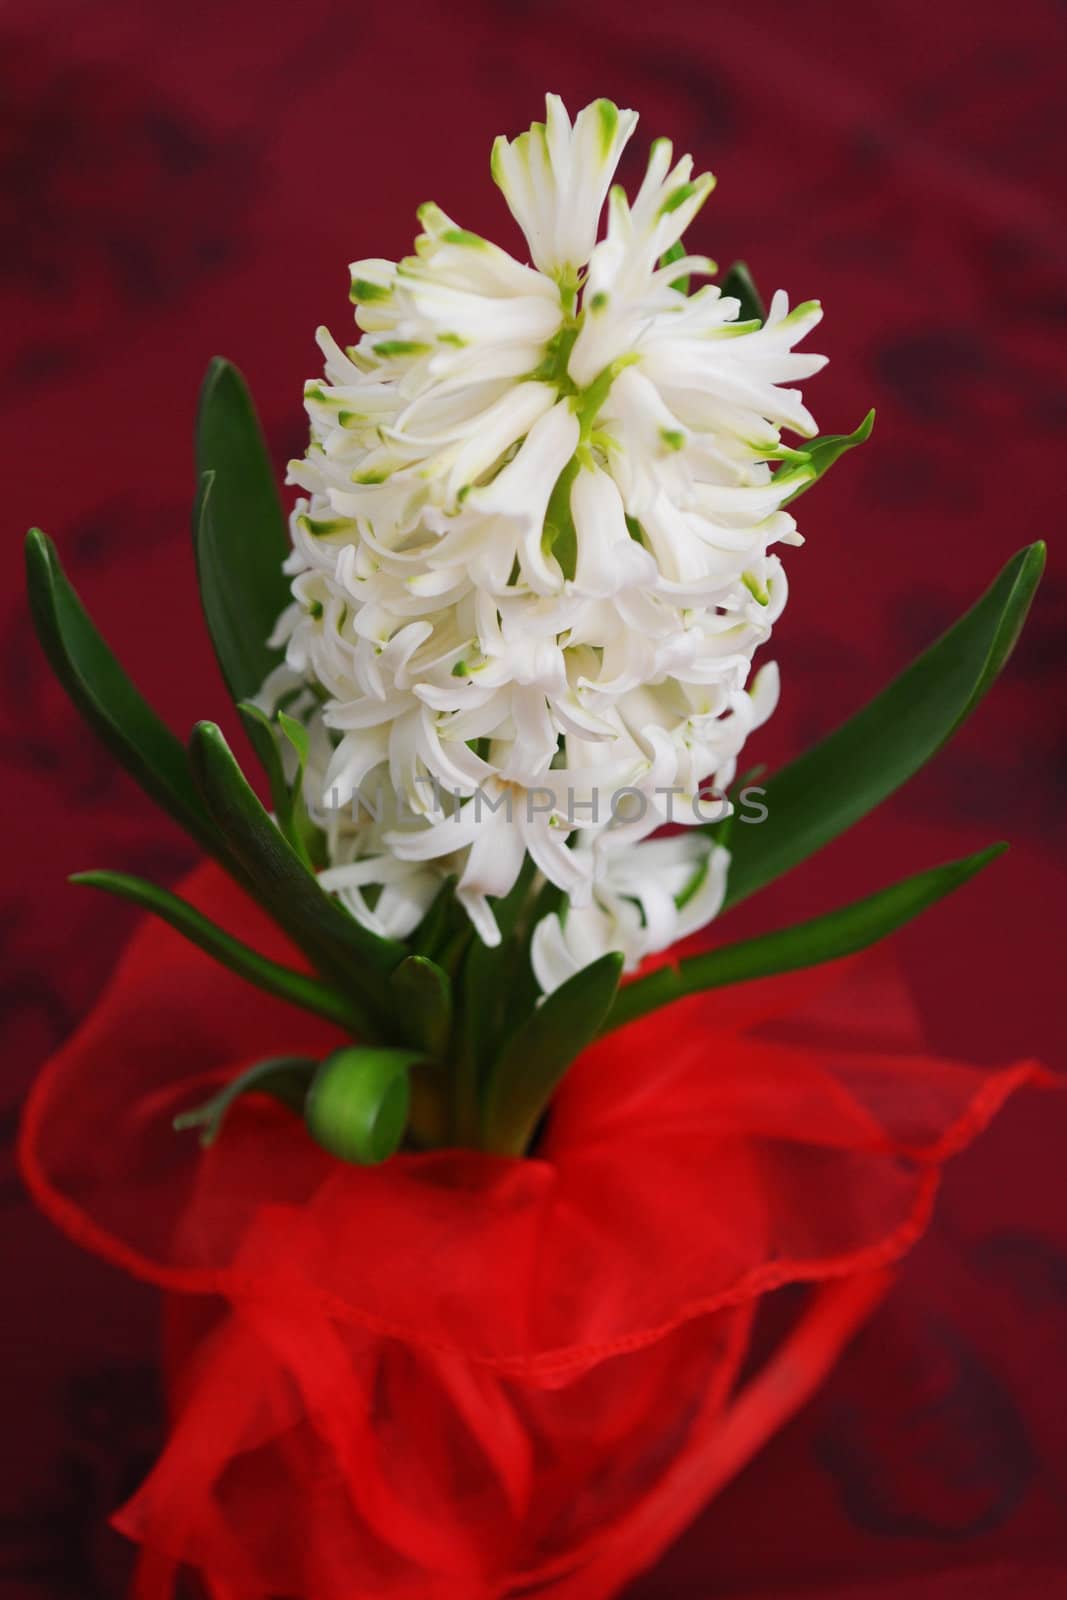 White hyacinth by Yaurinko